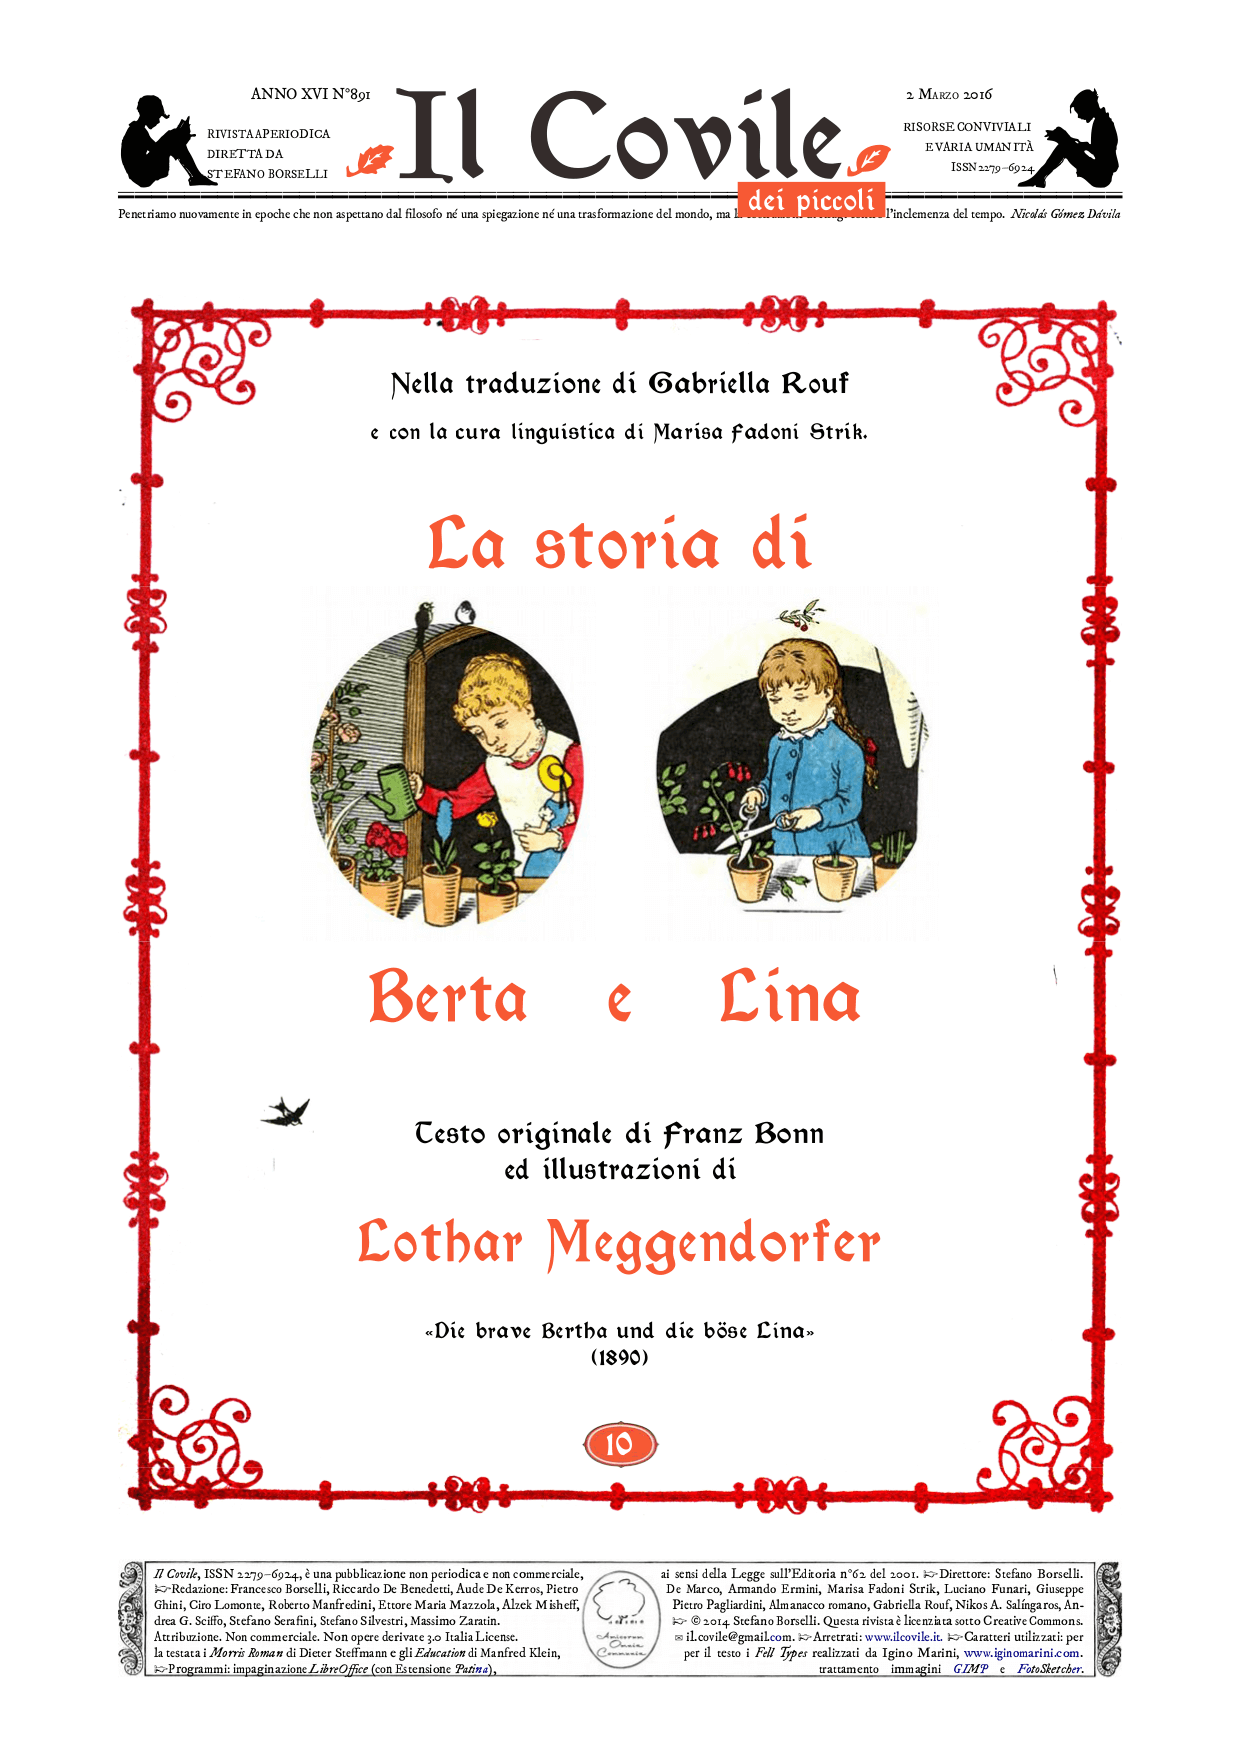 Copertina di La storia di Berta e Lina.